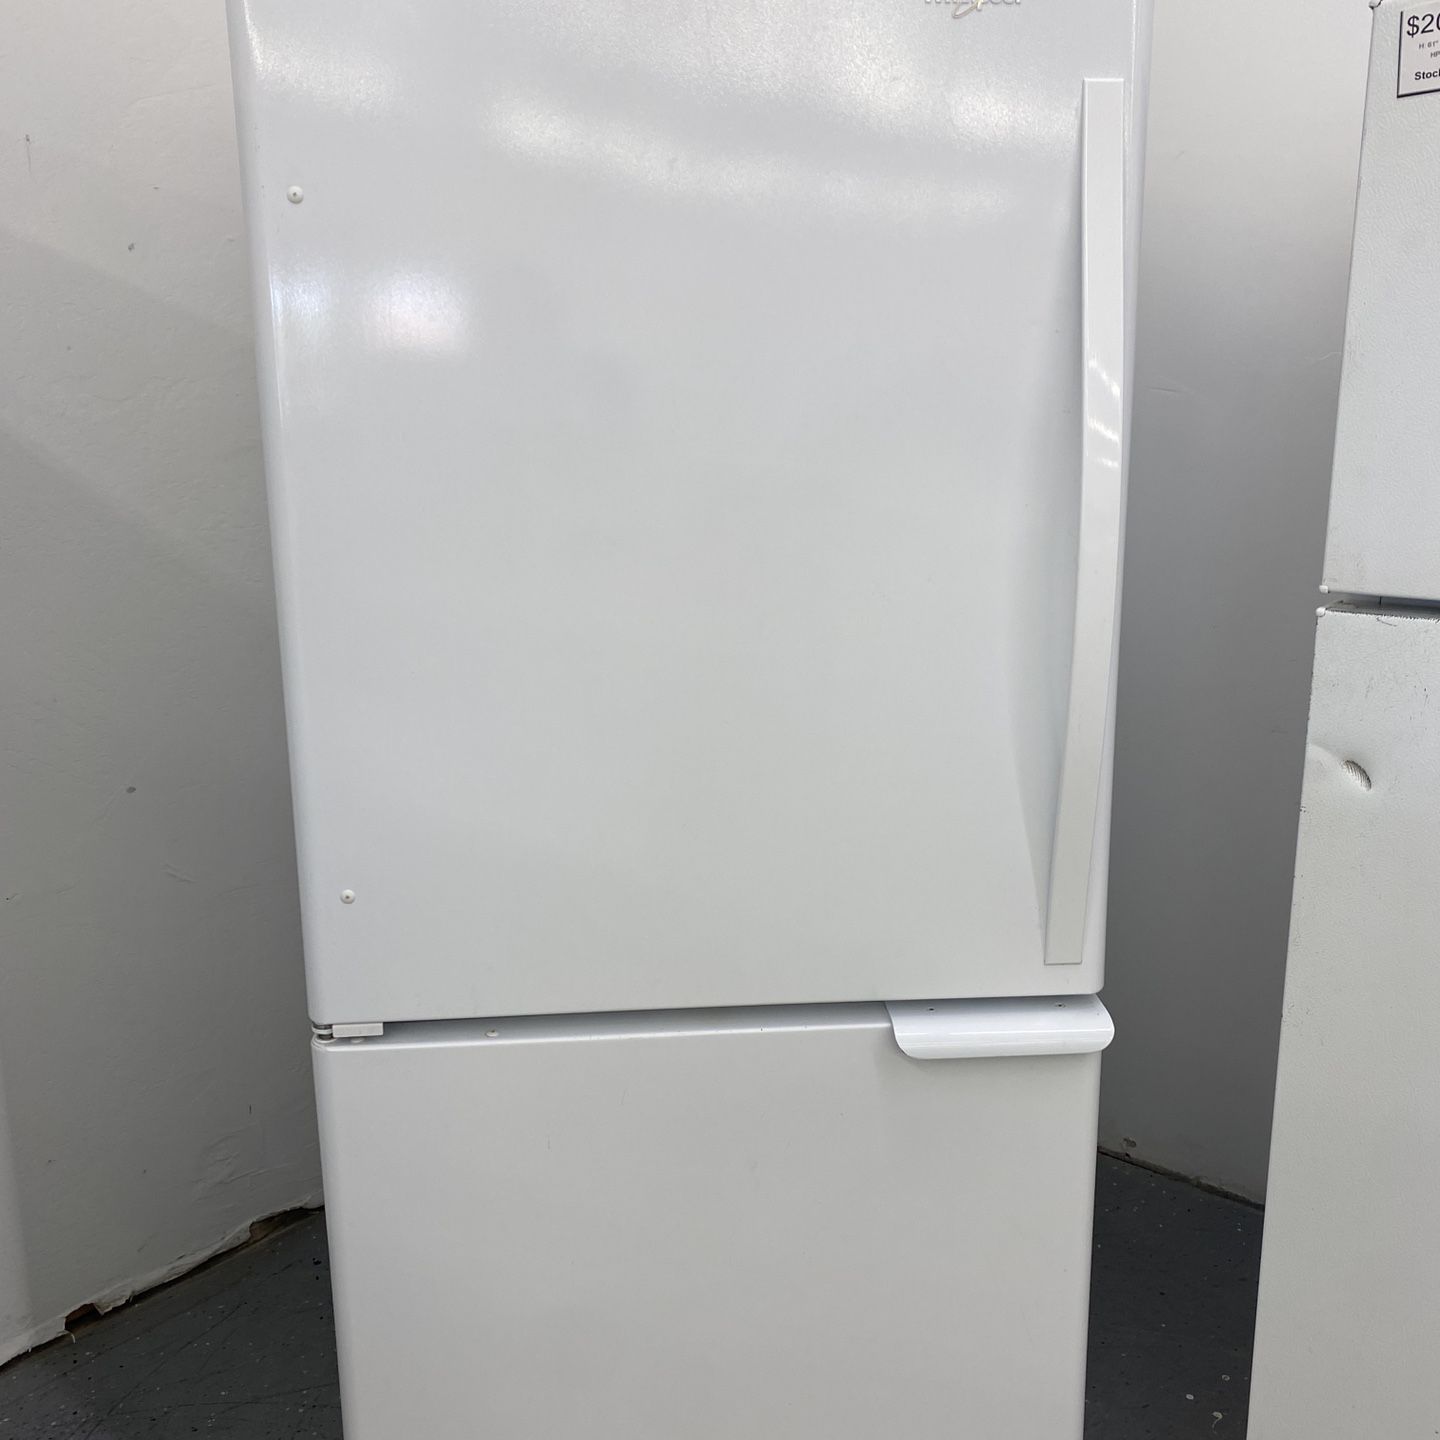 White Whirlpool Bottom Freezer Refrigerator